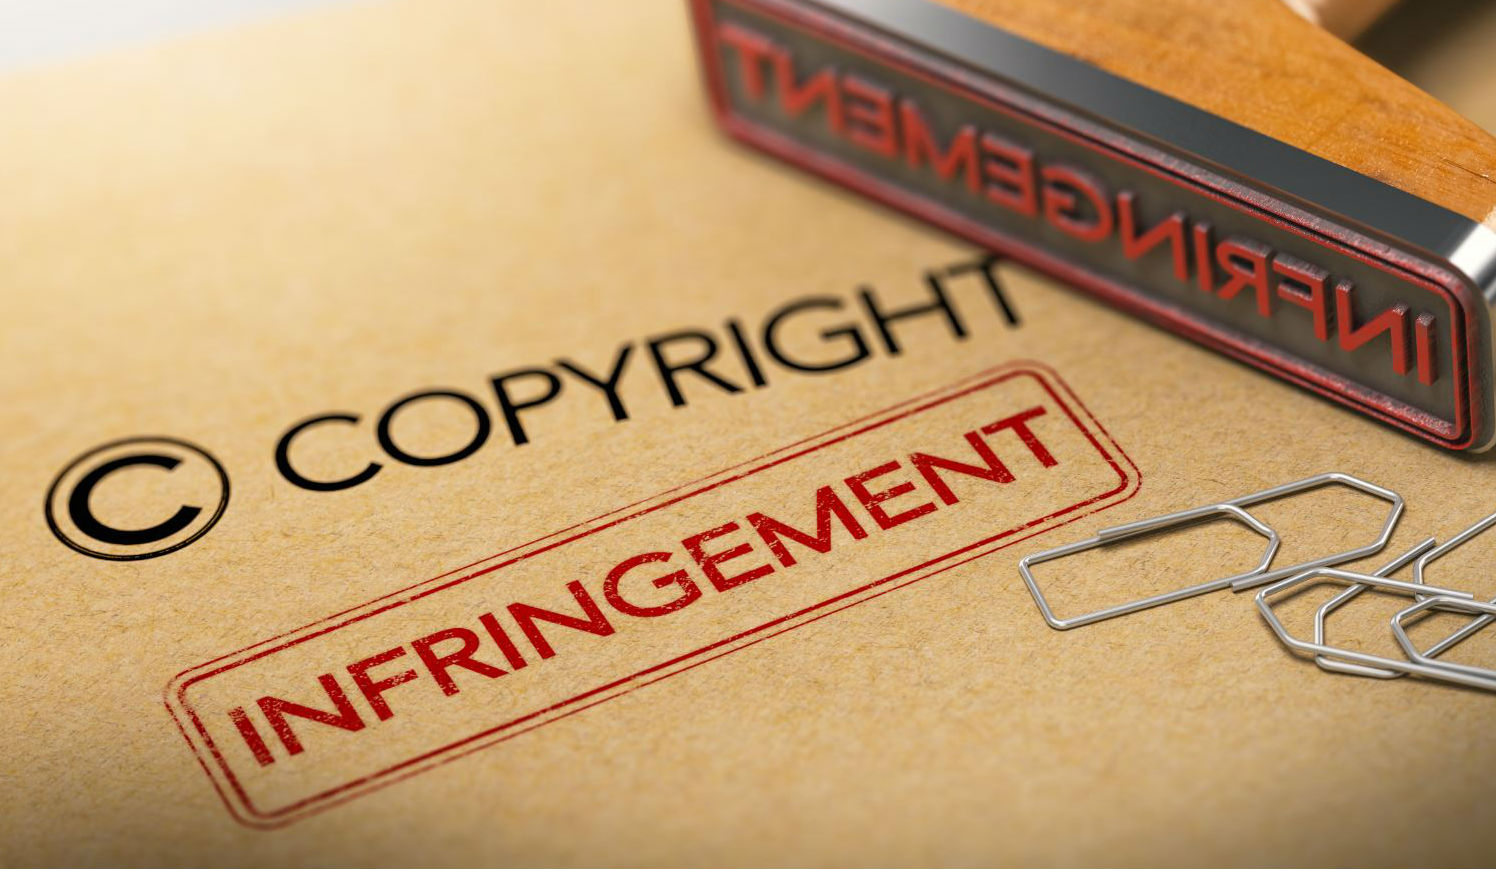 dmca copyright infringement